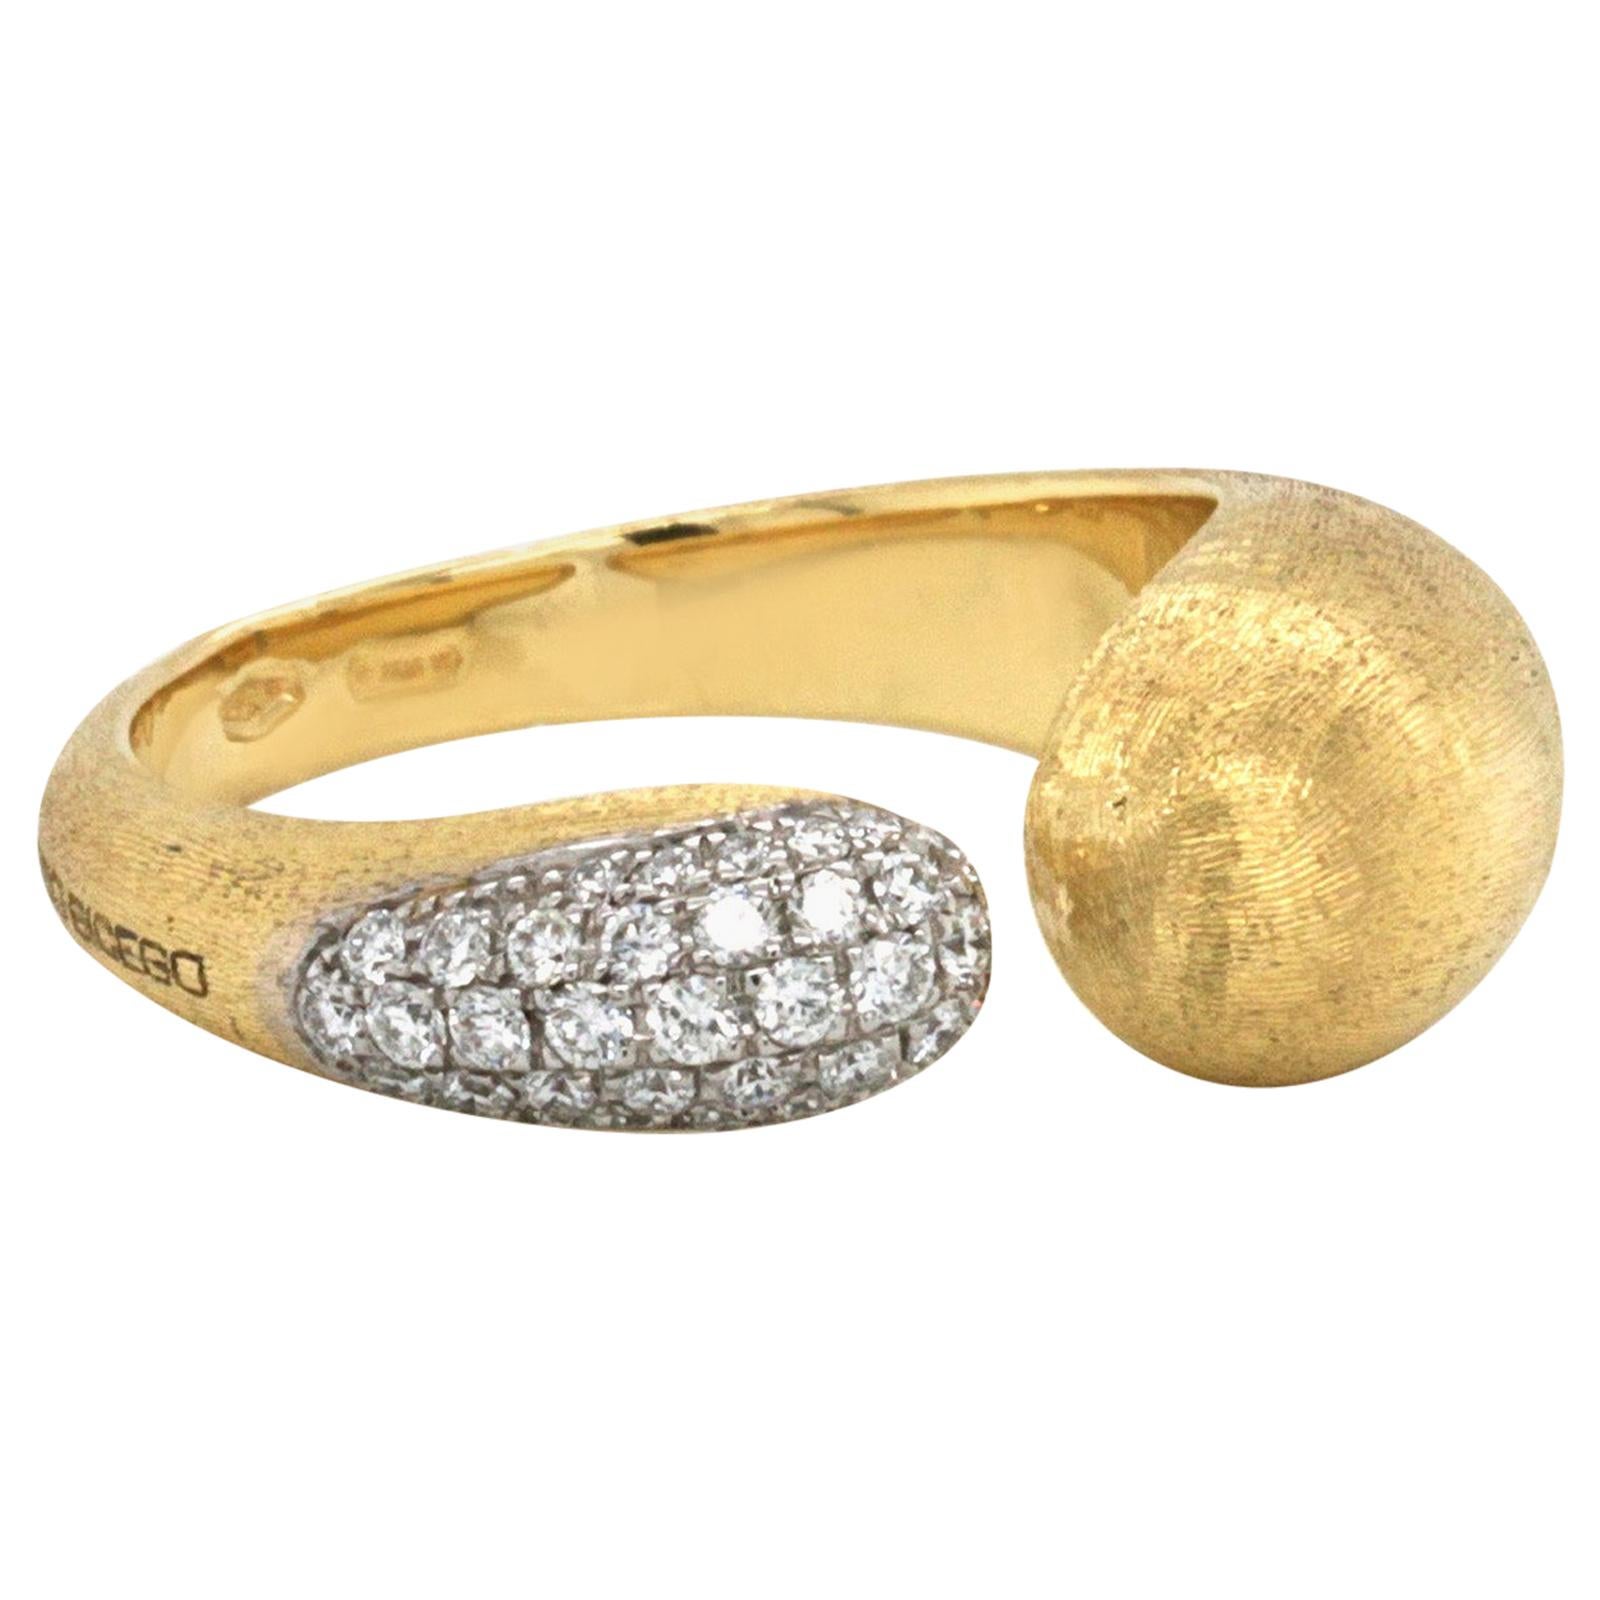 Authentic MarCo Bicego Lucia 18 Karat Yellow Gold Diamond Ring